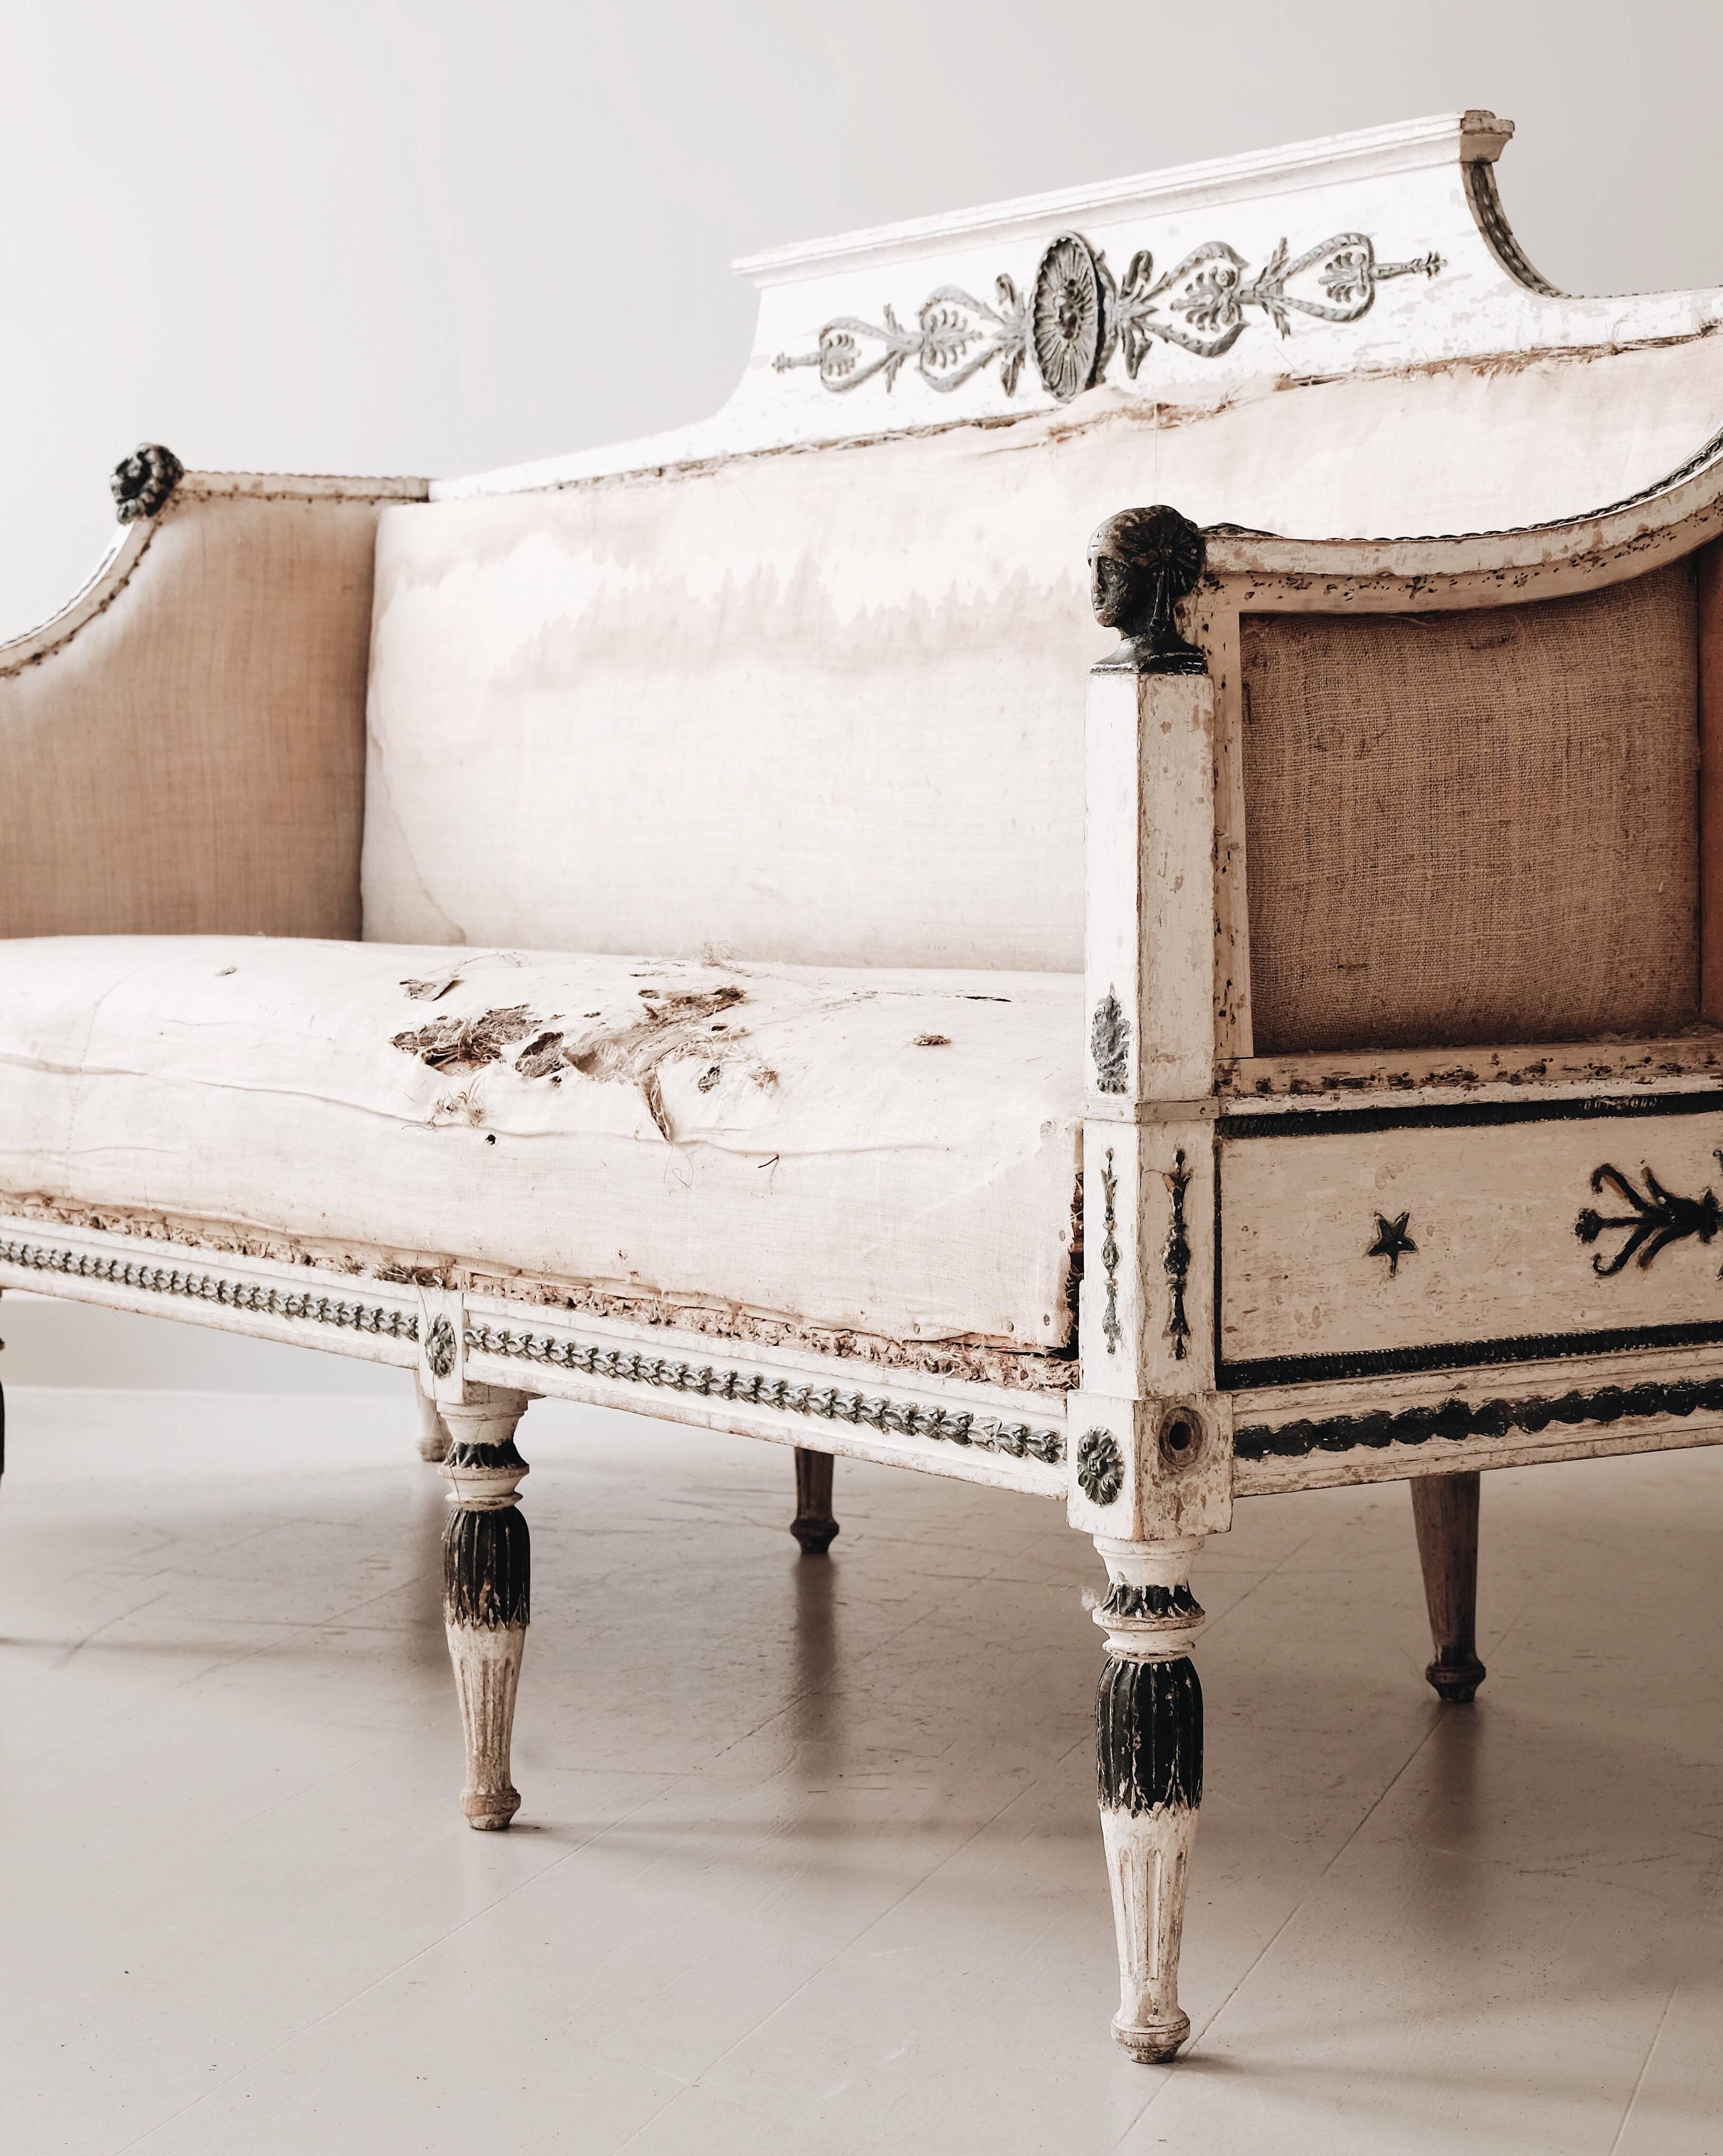 Swedish 19th Century Gustavian Sofa